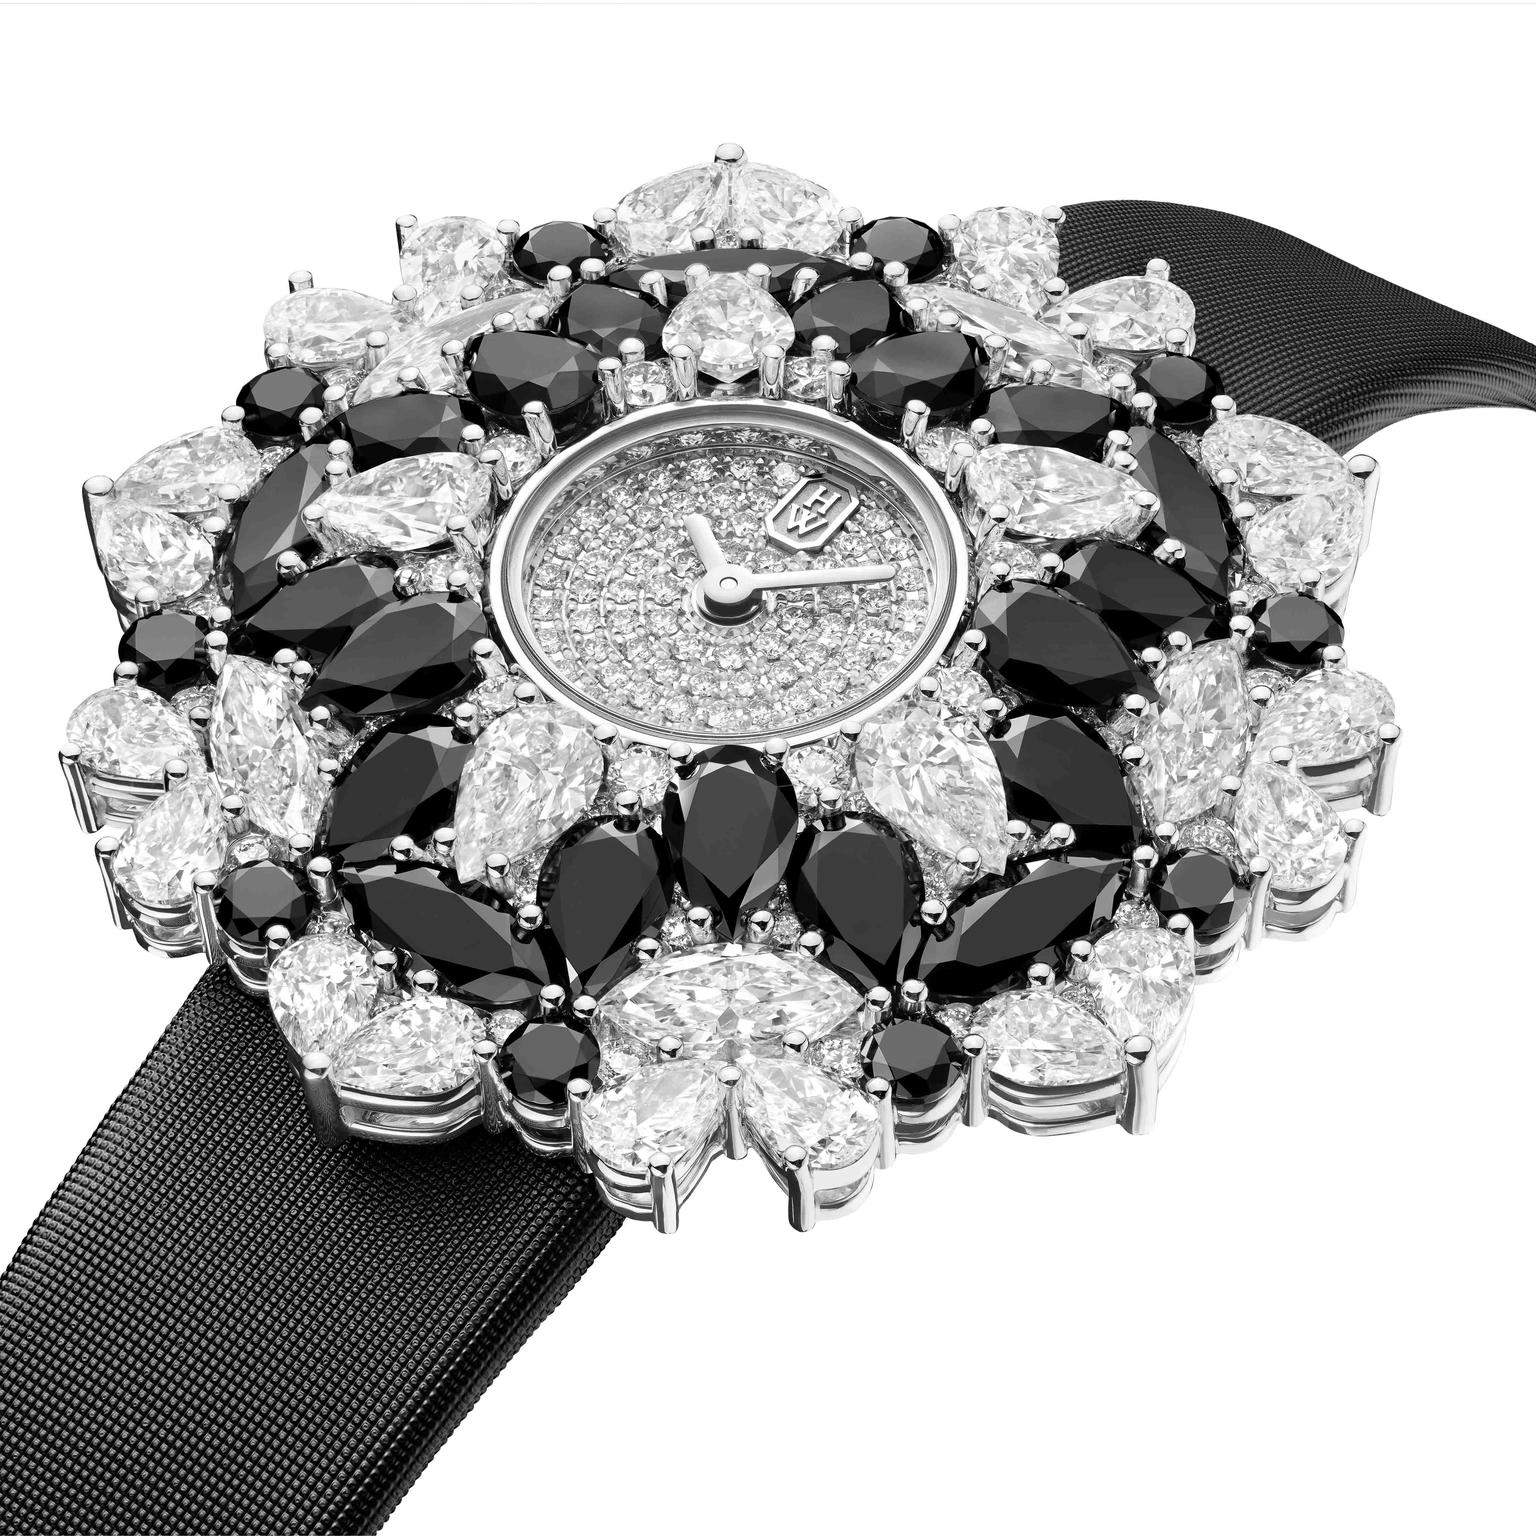 Harry Winston Kaleidoscope High Jewellery watch with diamonds side